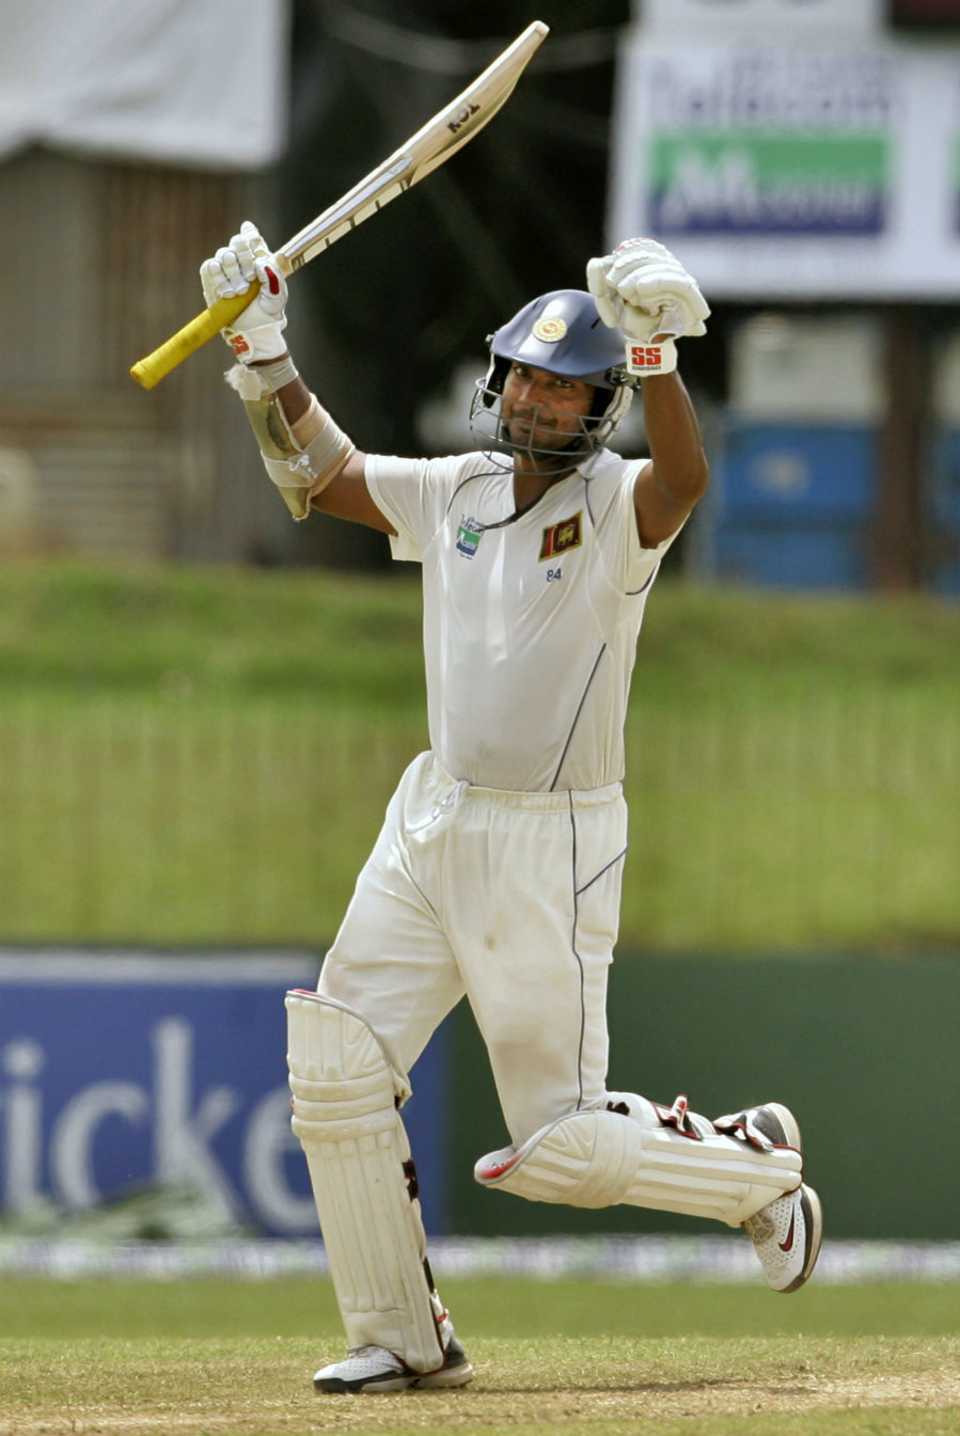 Kumar Sangakkara celebrates after getting to hundred, Sri Lanka v New Zealand, 2nd Test, SSC, 5th day, August 30, 2009